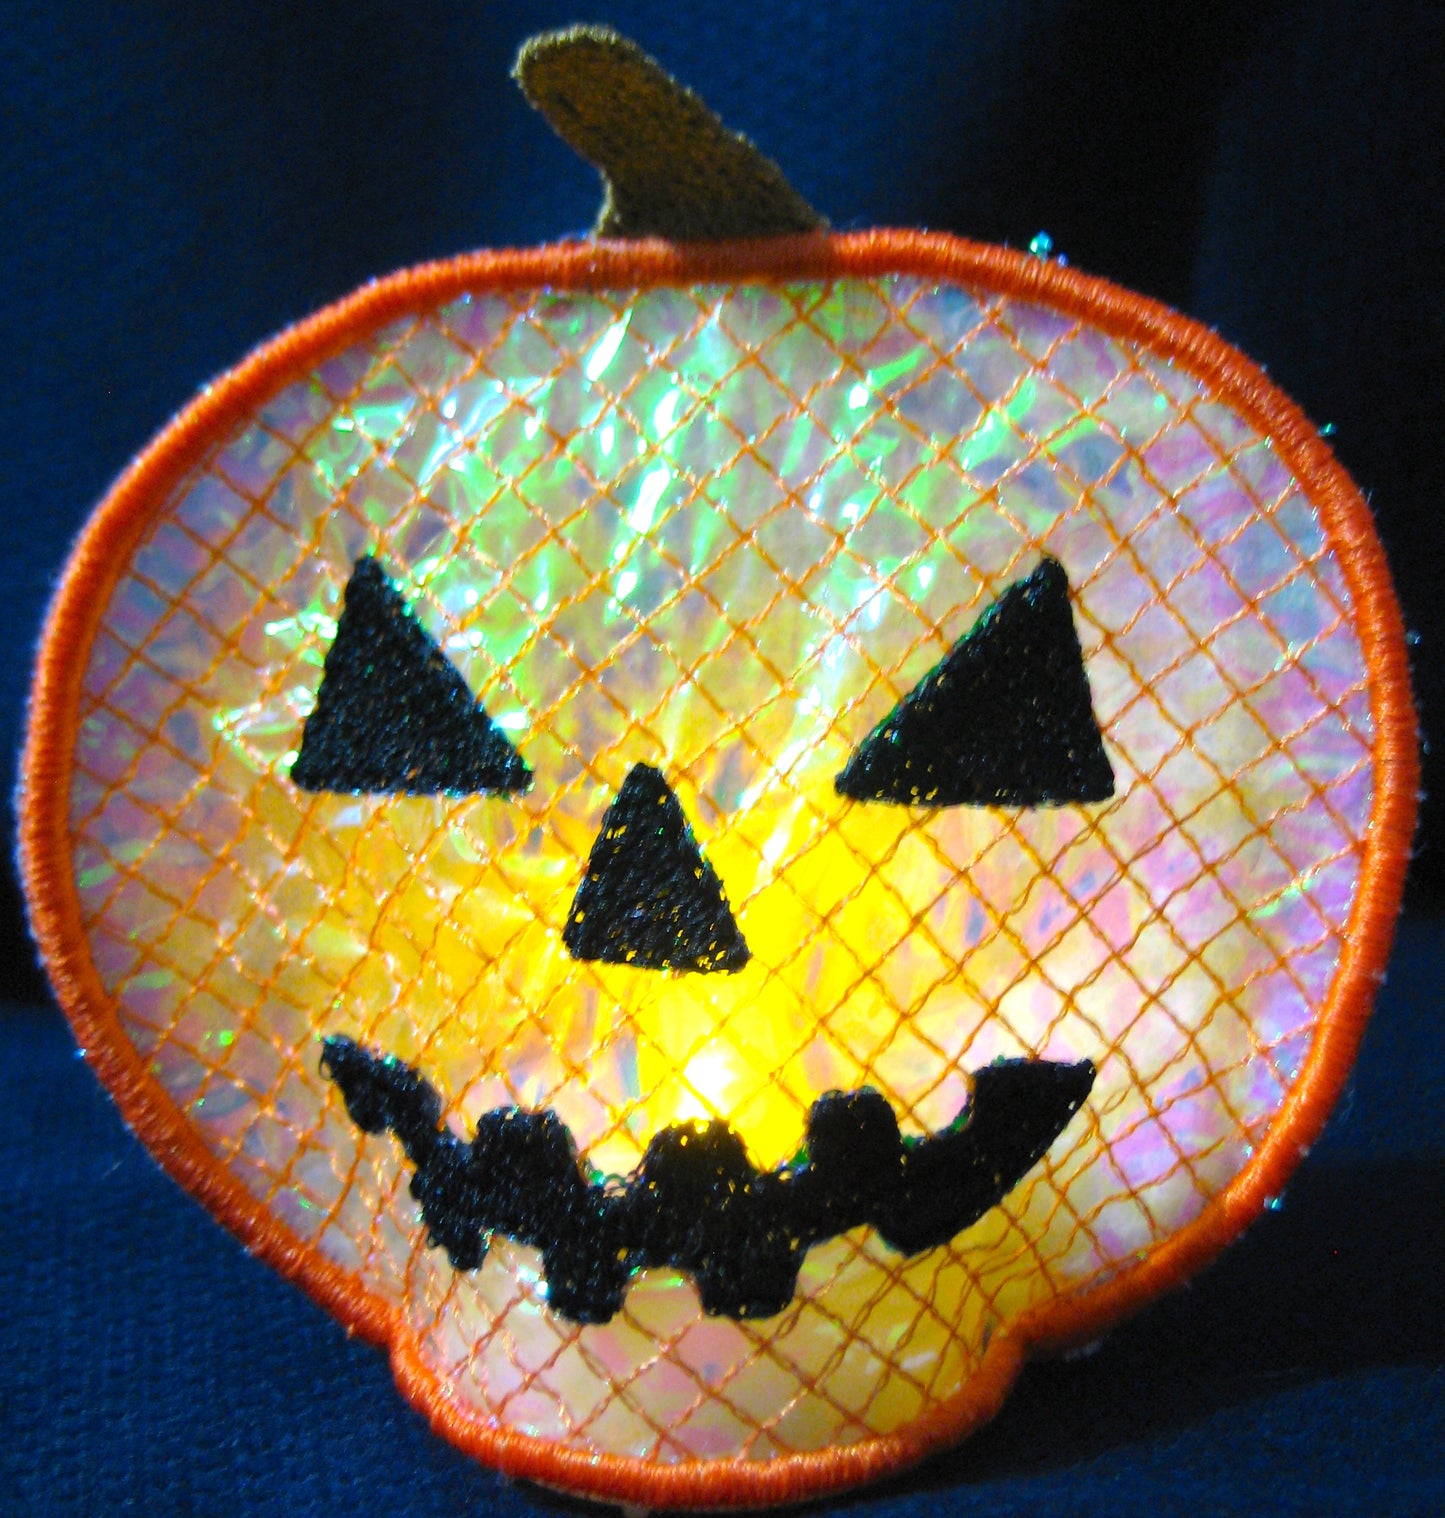 ITH Mylar Halloween Tealights [4x4] 10812 Machine Embroidery Designs